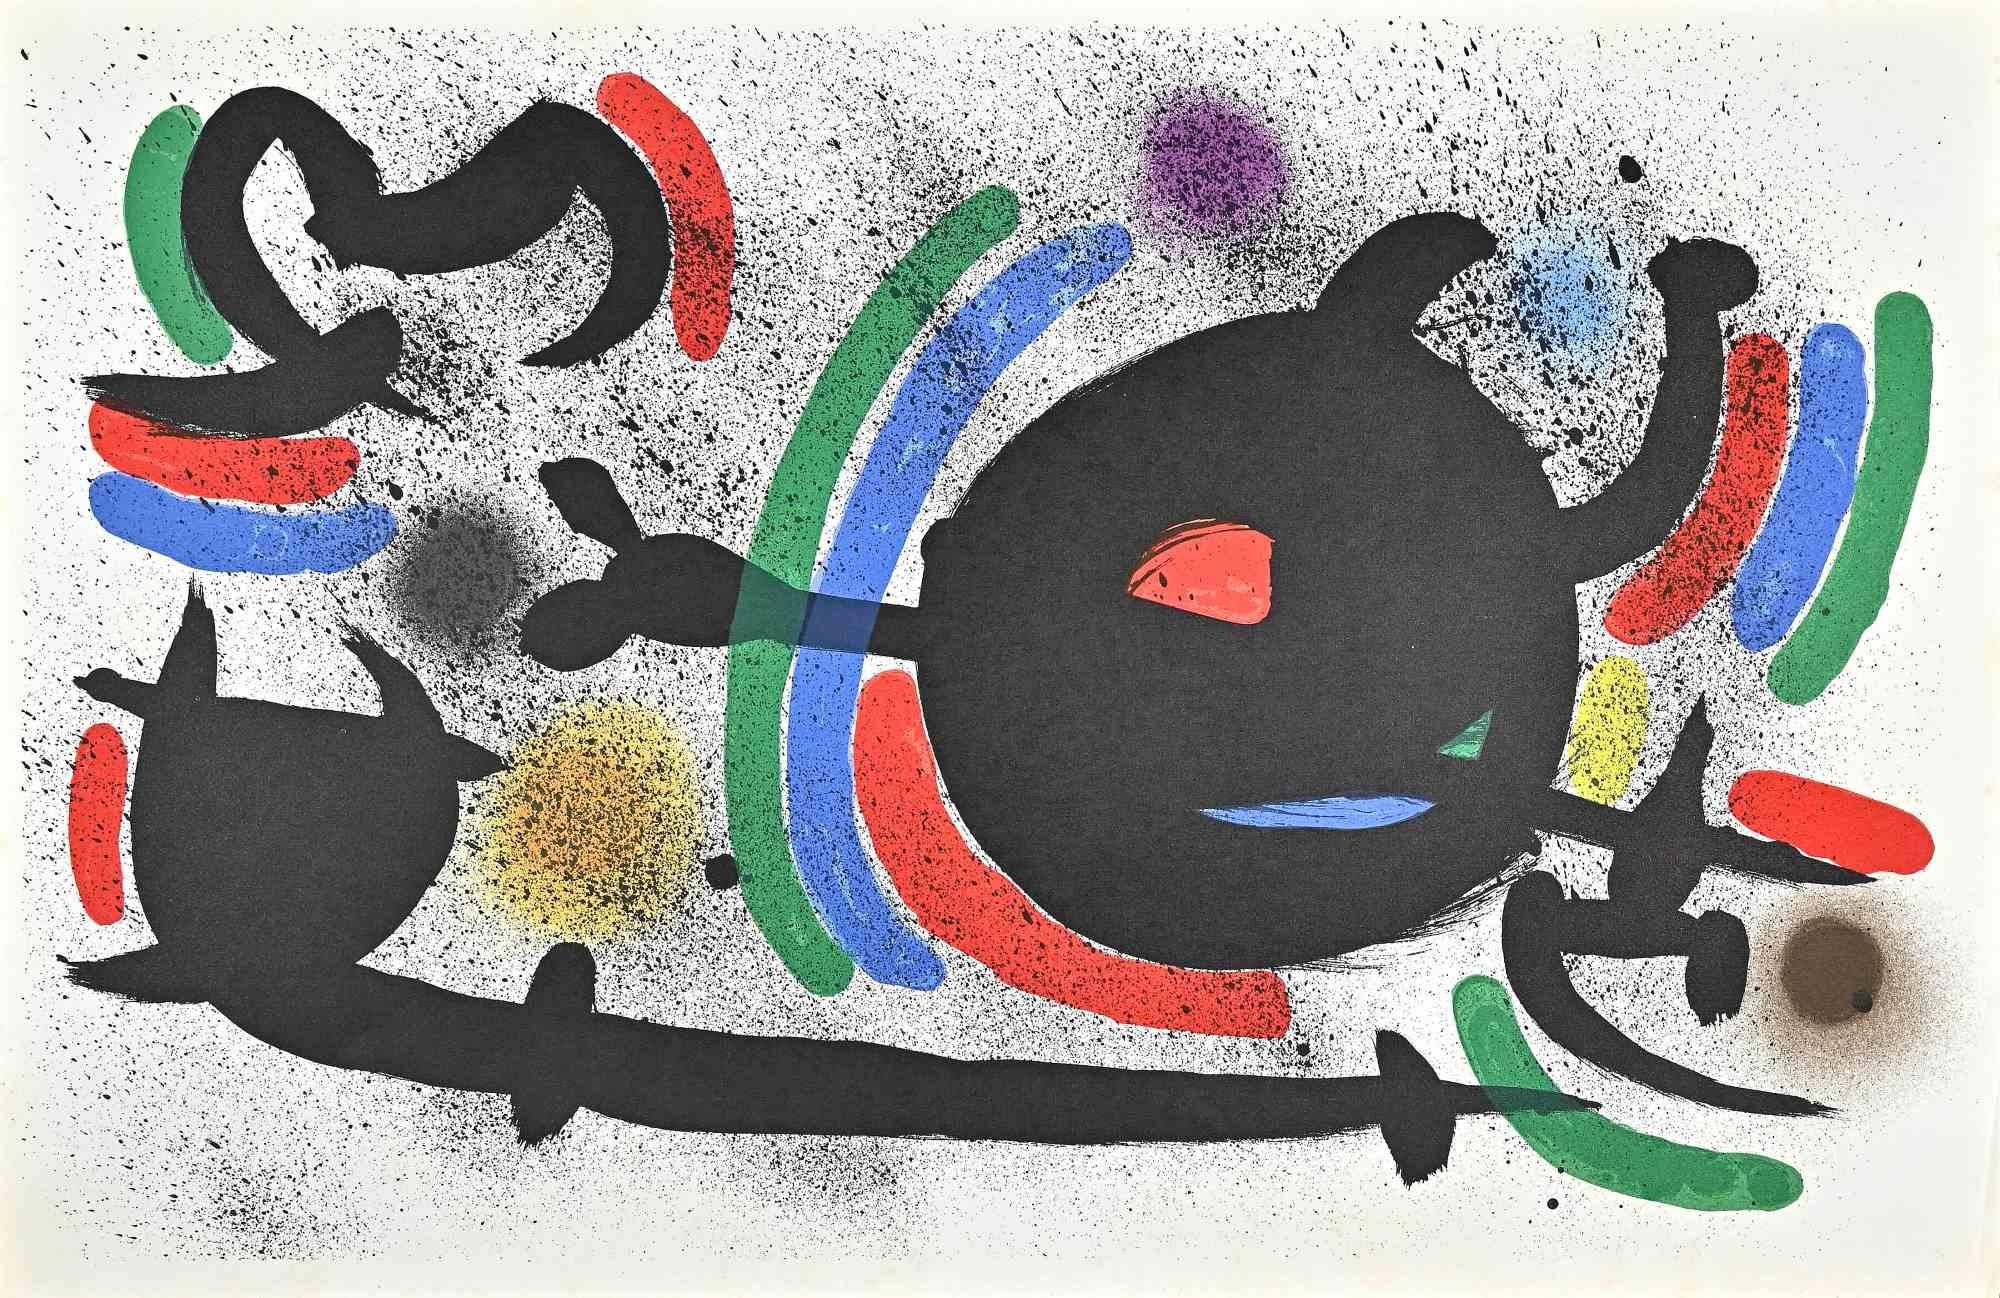 Joan Miró Abstract Print - Miró Lithographe I - Plate X - Lithograph by Joan Mirò - 1972